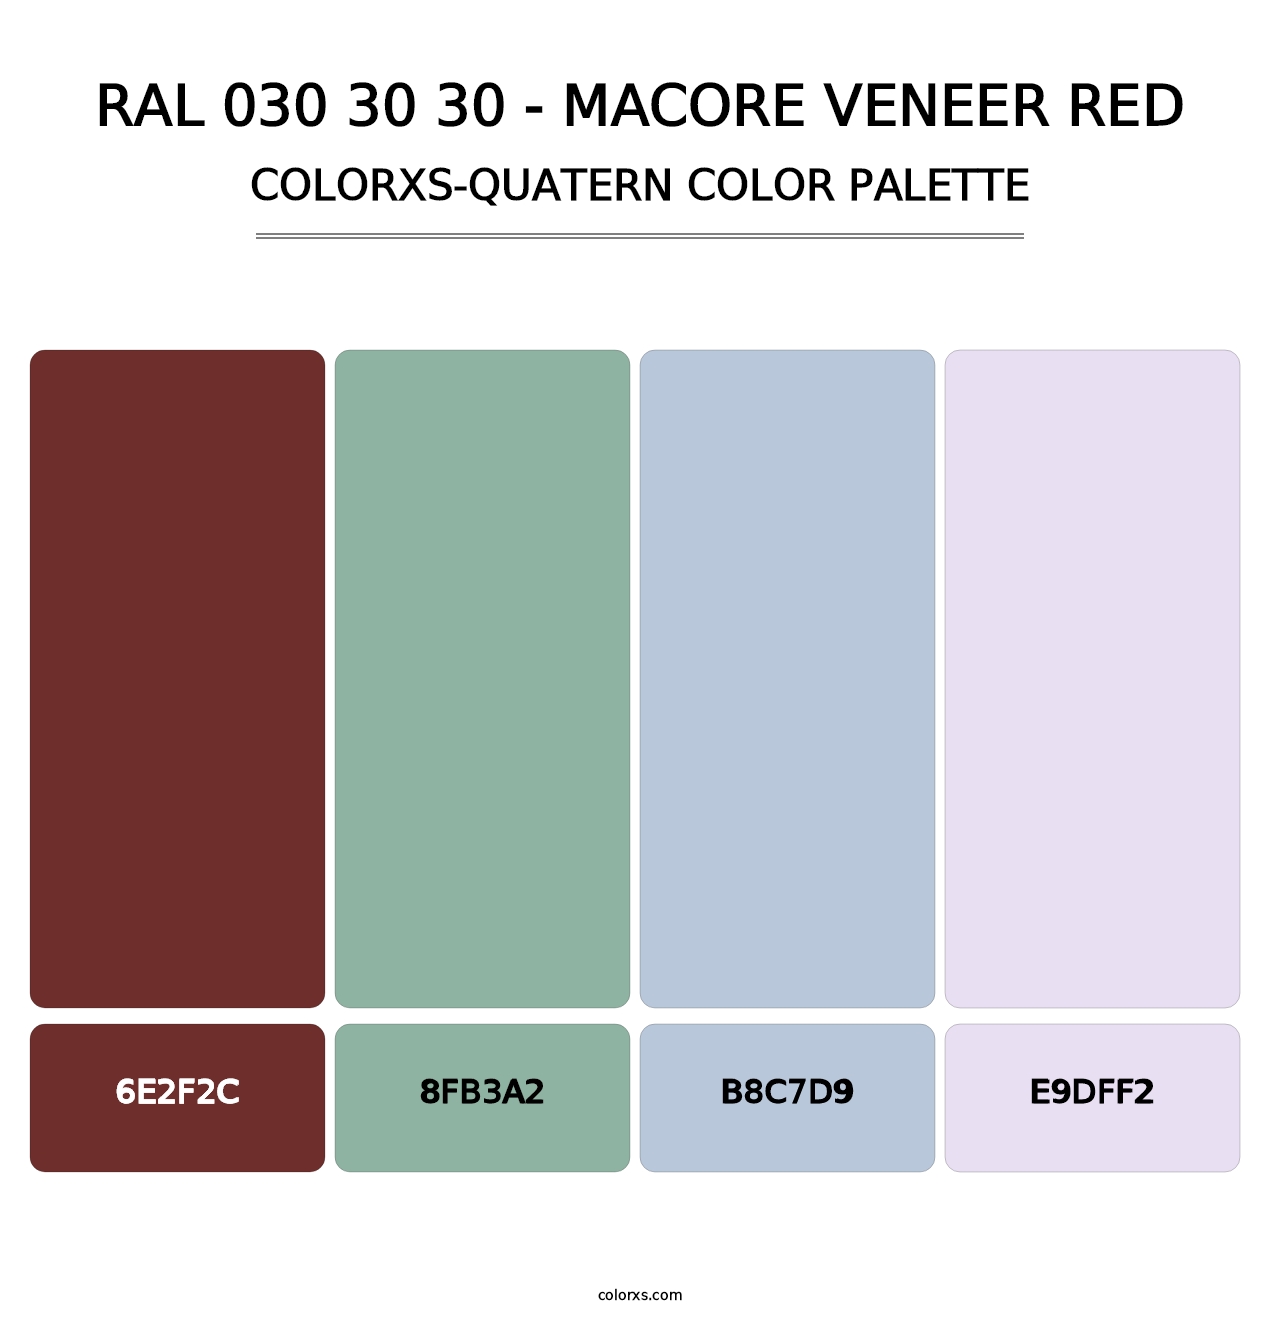 RAL 030 30 30 - Macore Veneer Red - Colorxs Quatern Palette